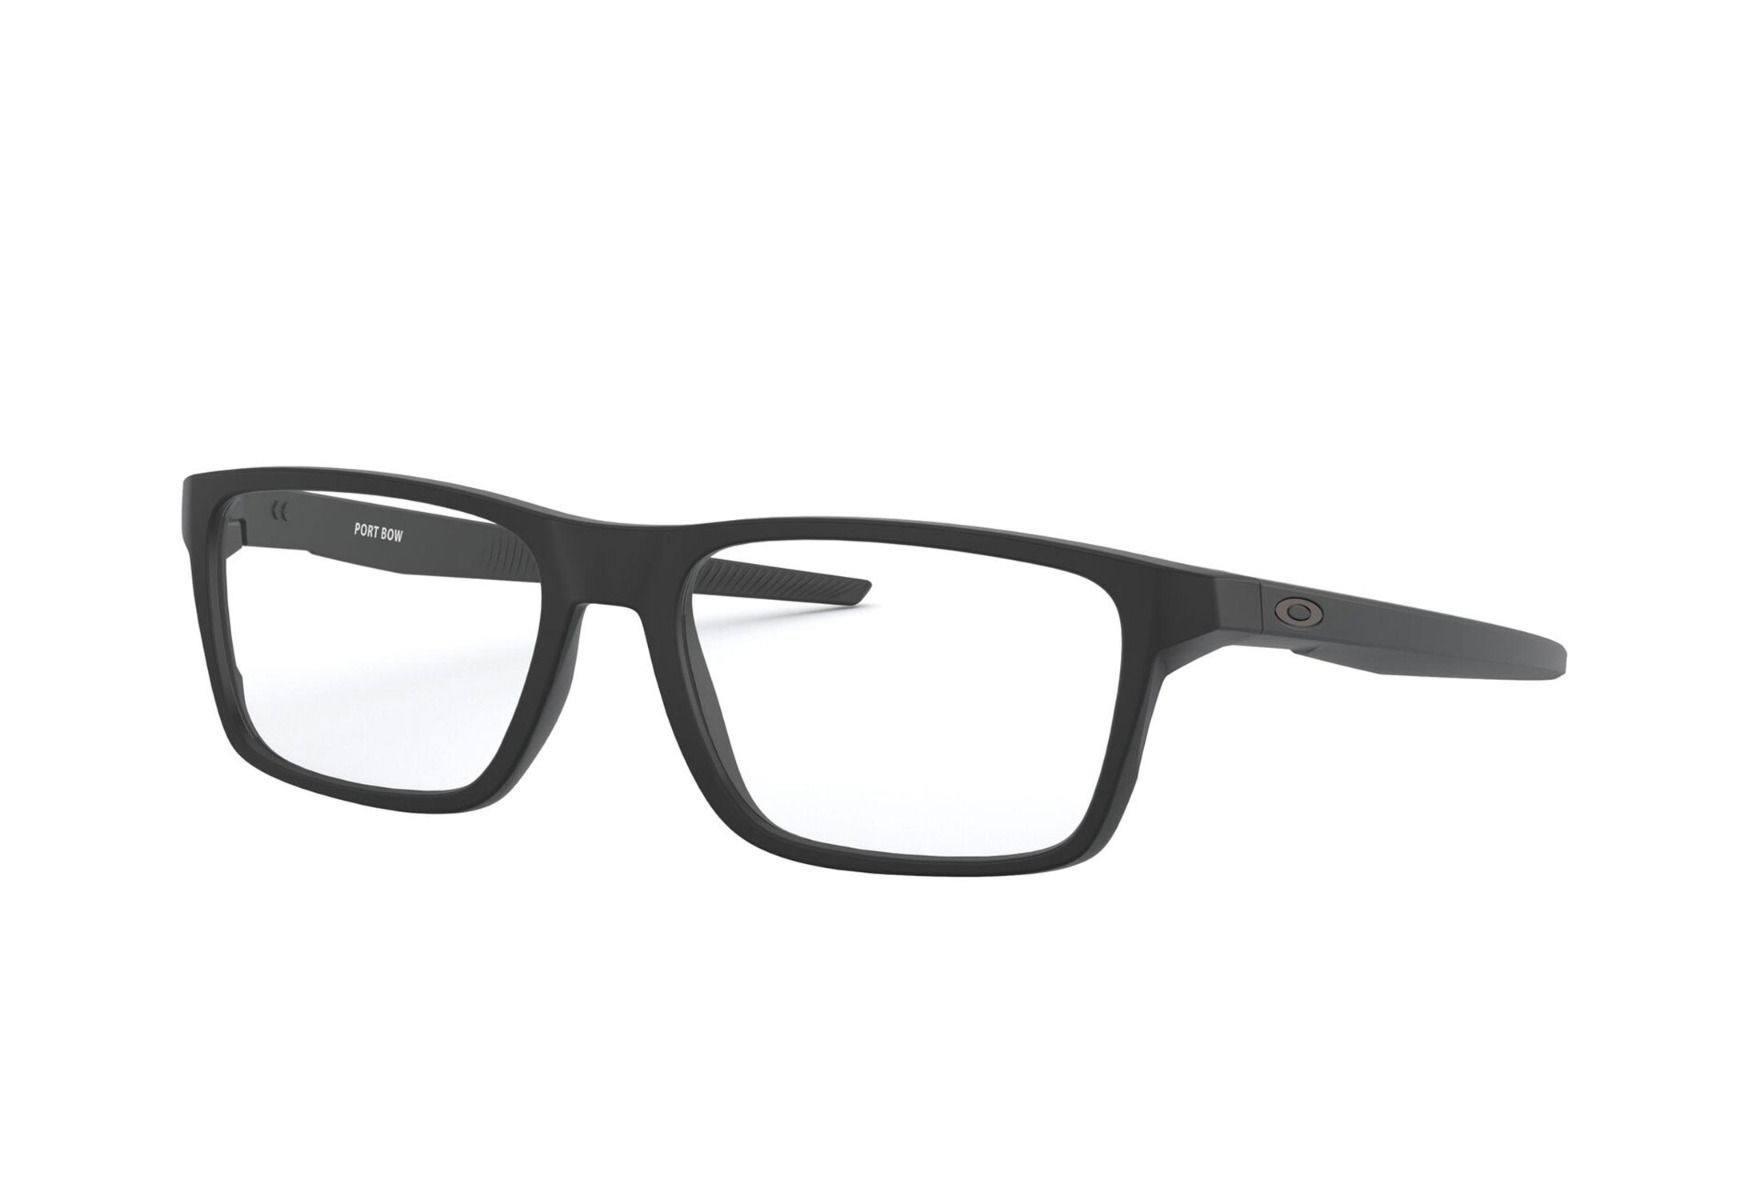 Oakley briller - Port Bow - Svart, Large Hel ramme i Plast - Rektangulære